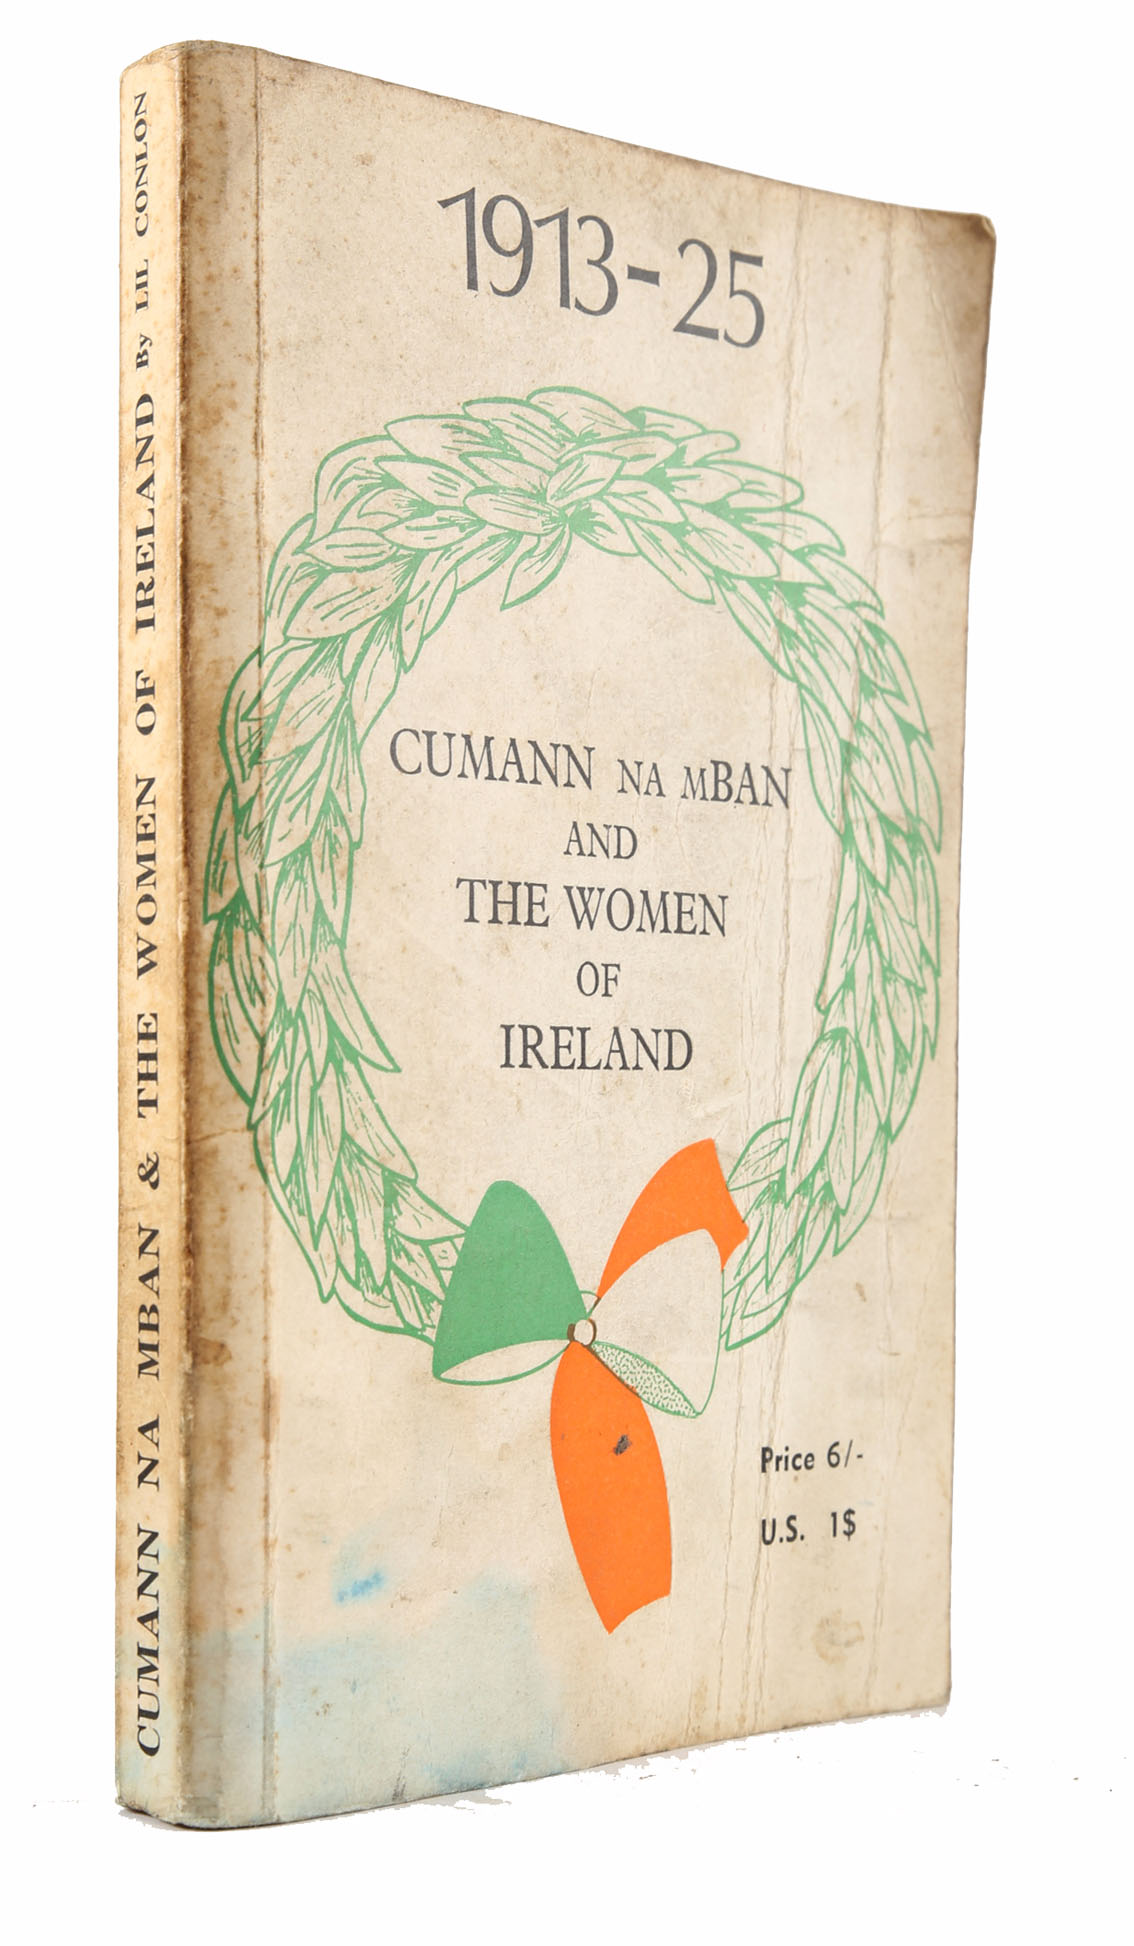 Conlon, Lil. Cumann na mBan and Women of Ireland 1913-25, Kilkenny People, 1969, first edition,